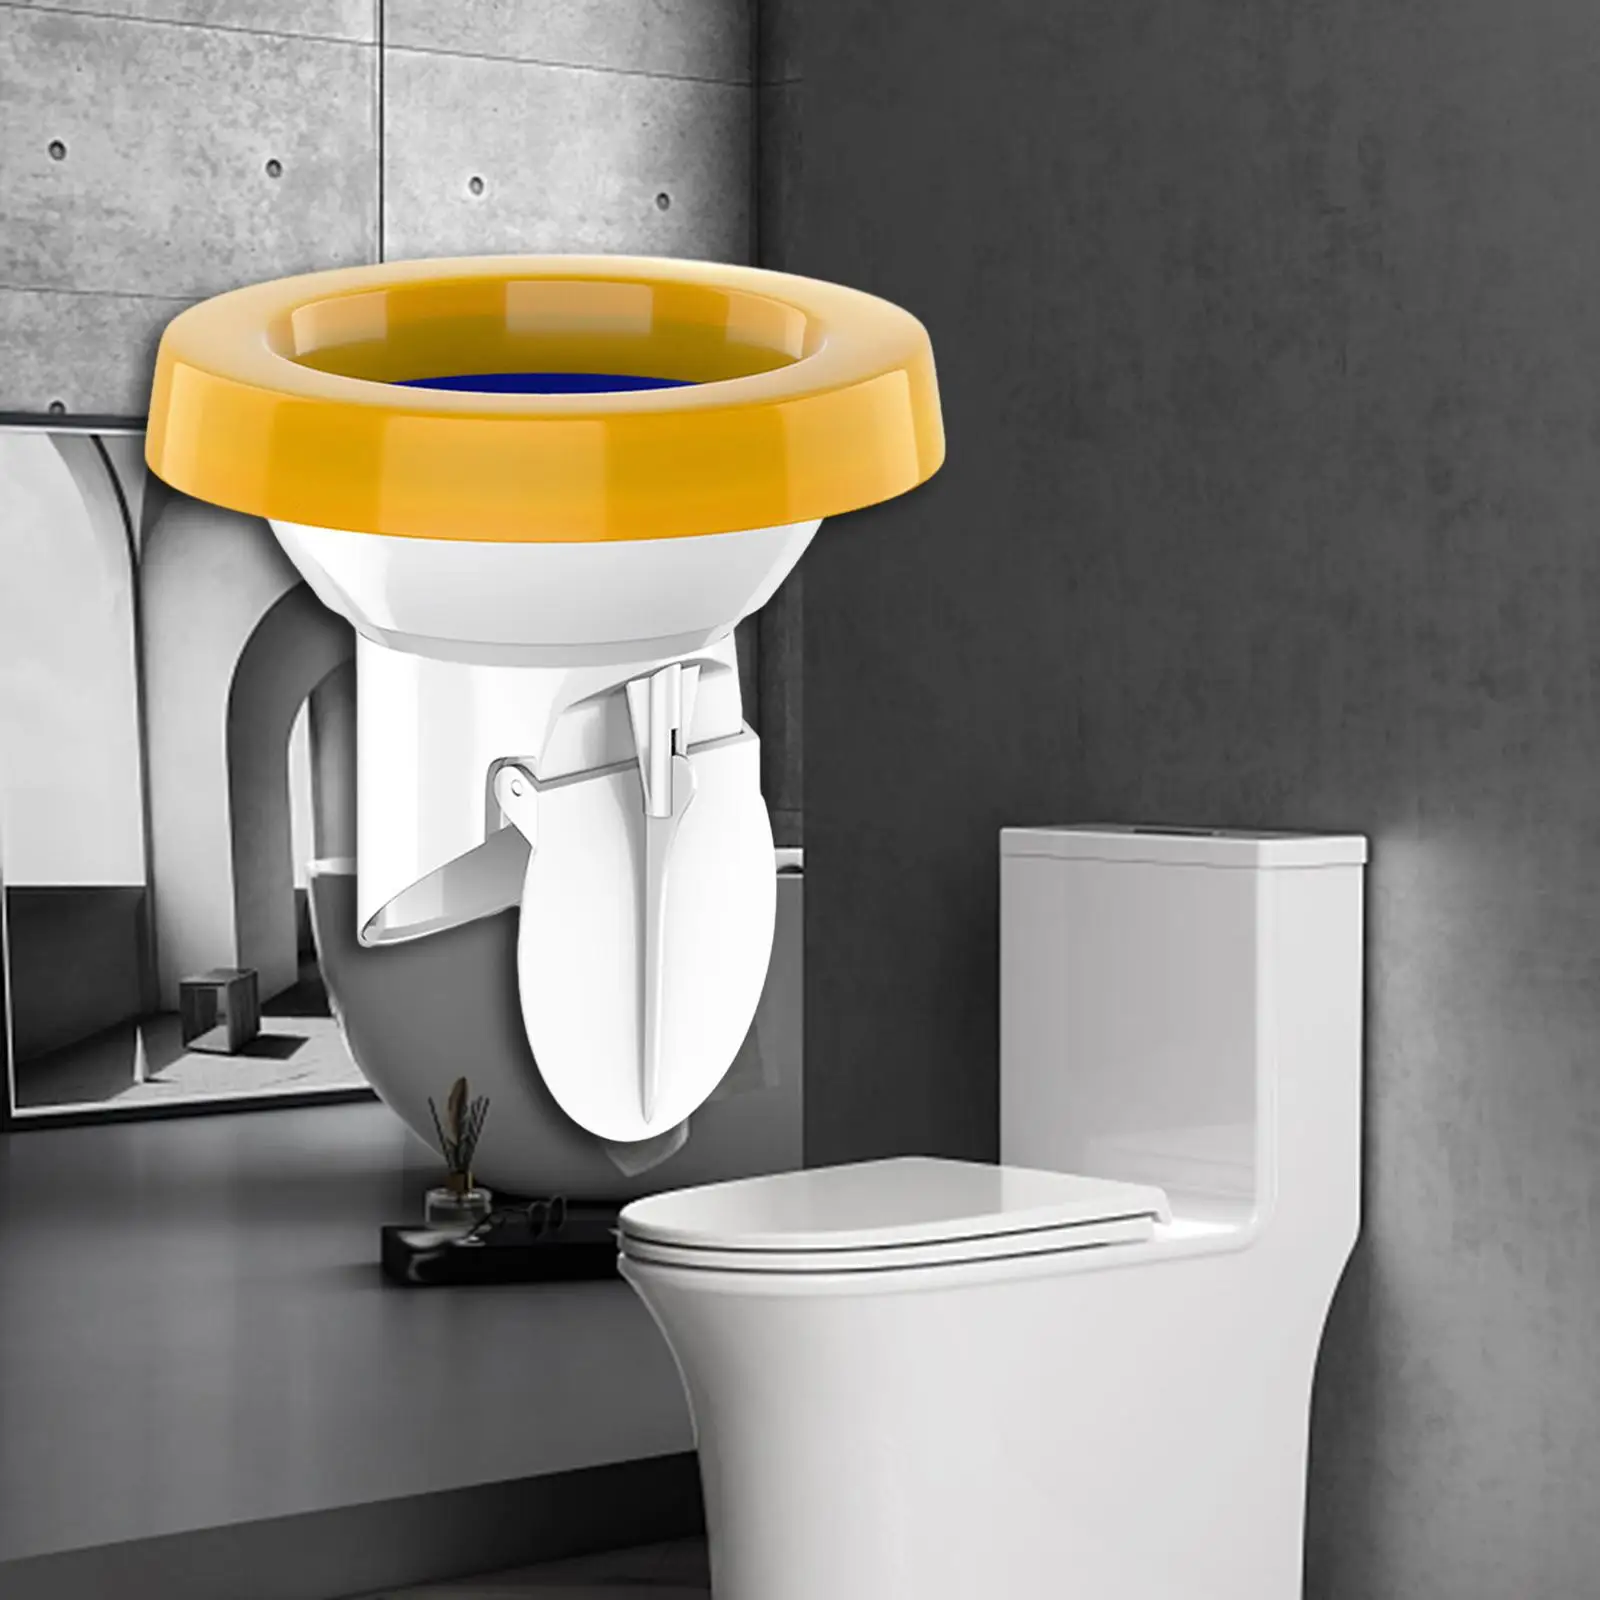 Toilet Flange Ring Easy Install Anti Blocking Odor Prevent Plug for Bathroom